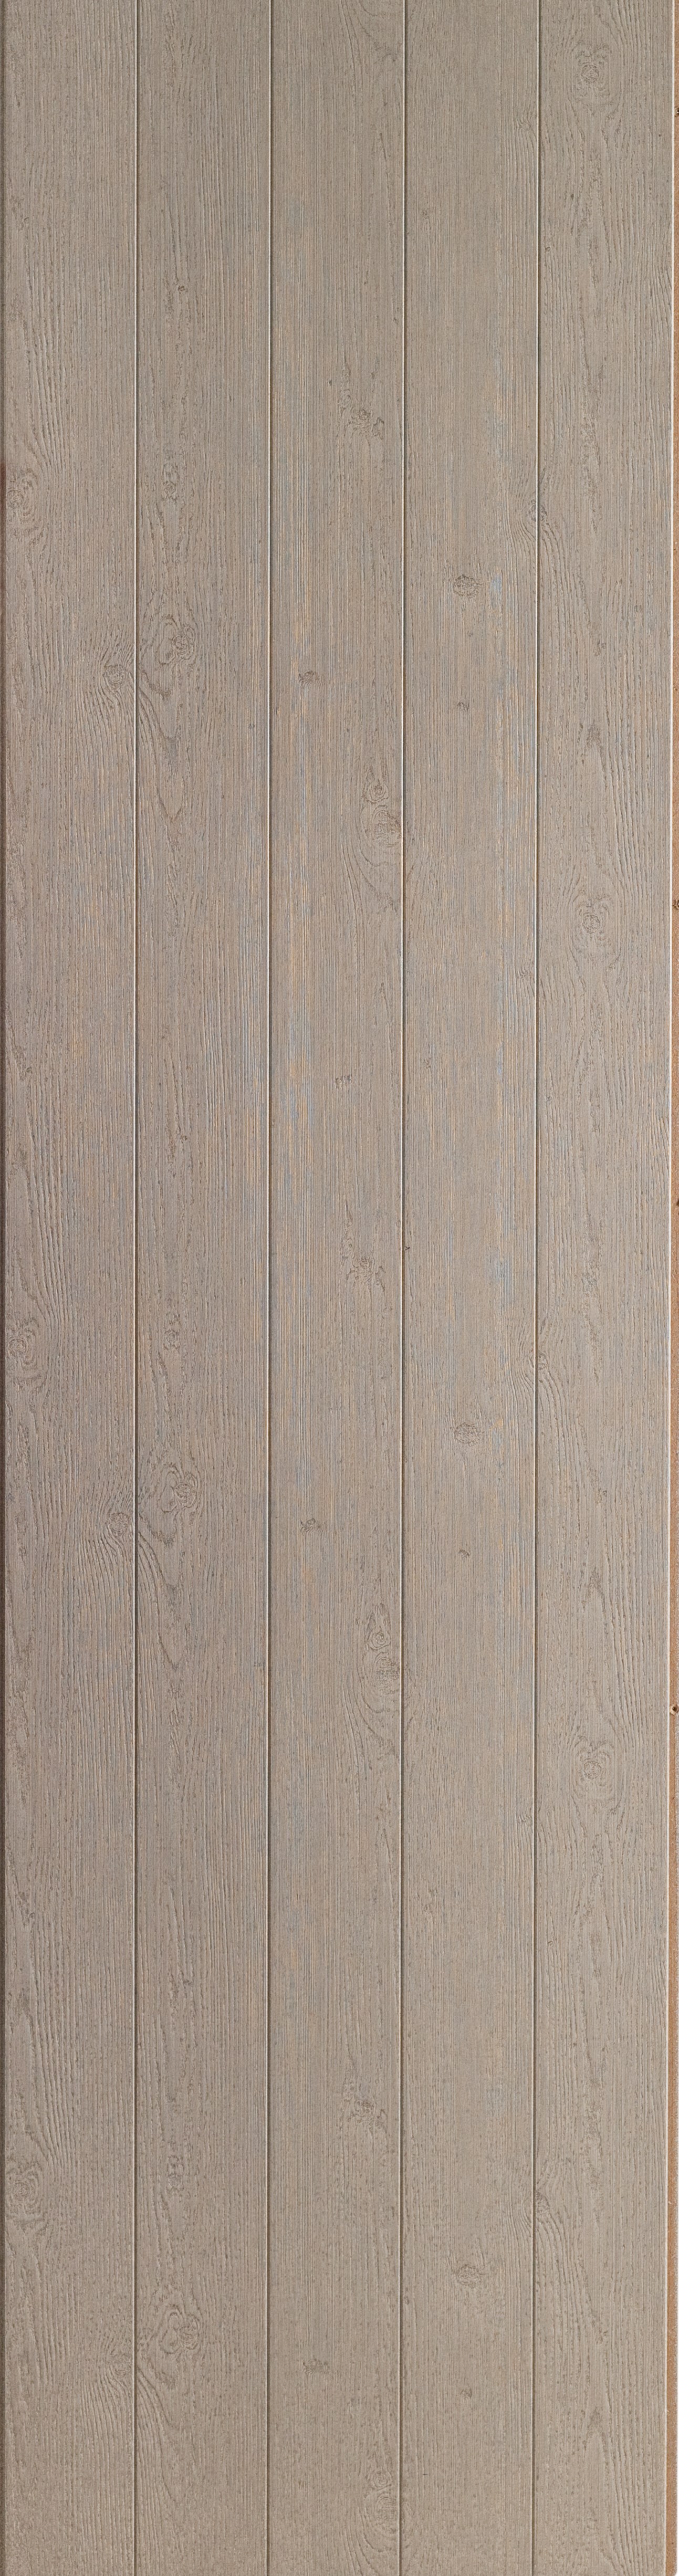 wood-wall-lasert-cappucino.jpg